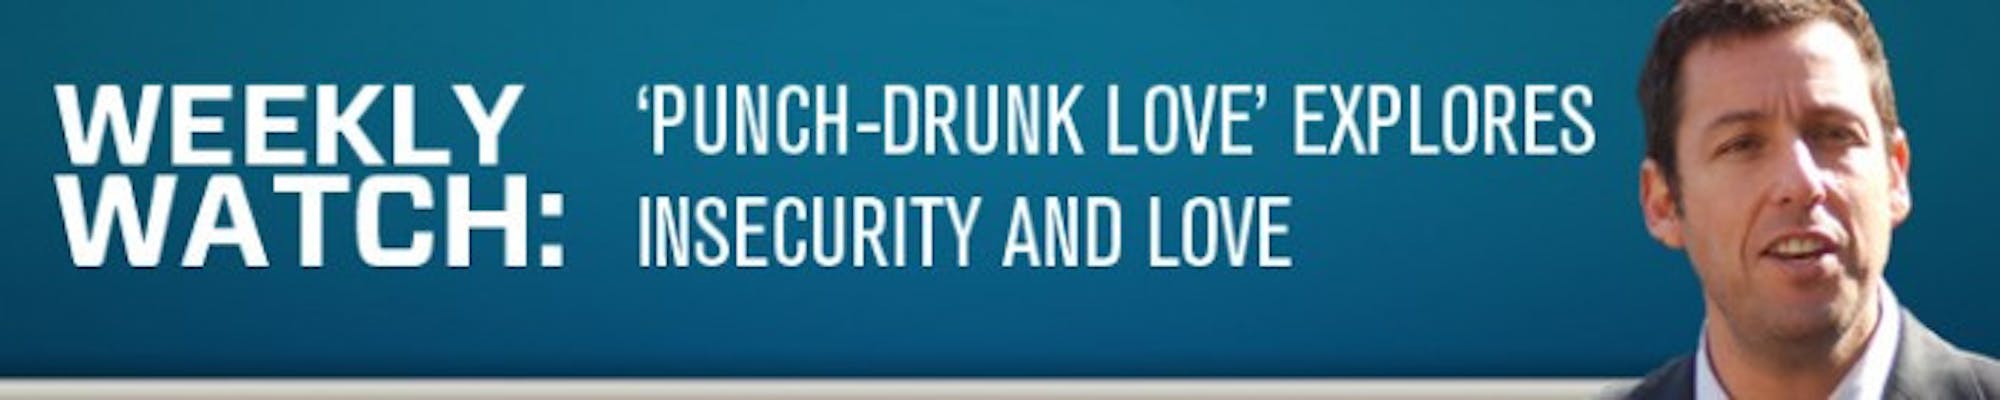 Punch-Drunk_Love_Web